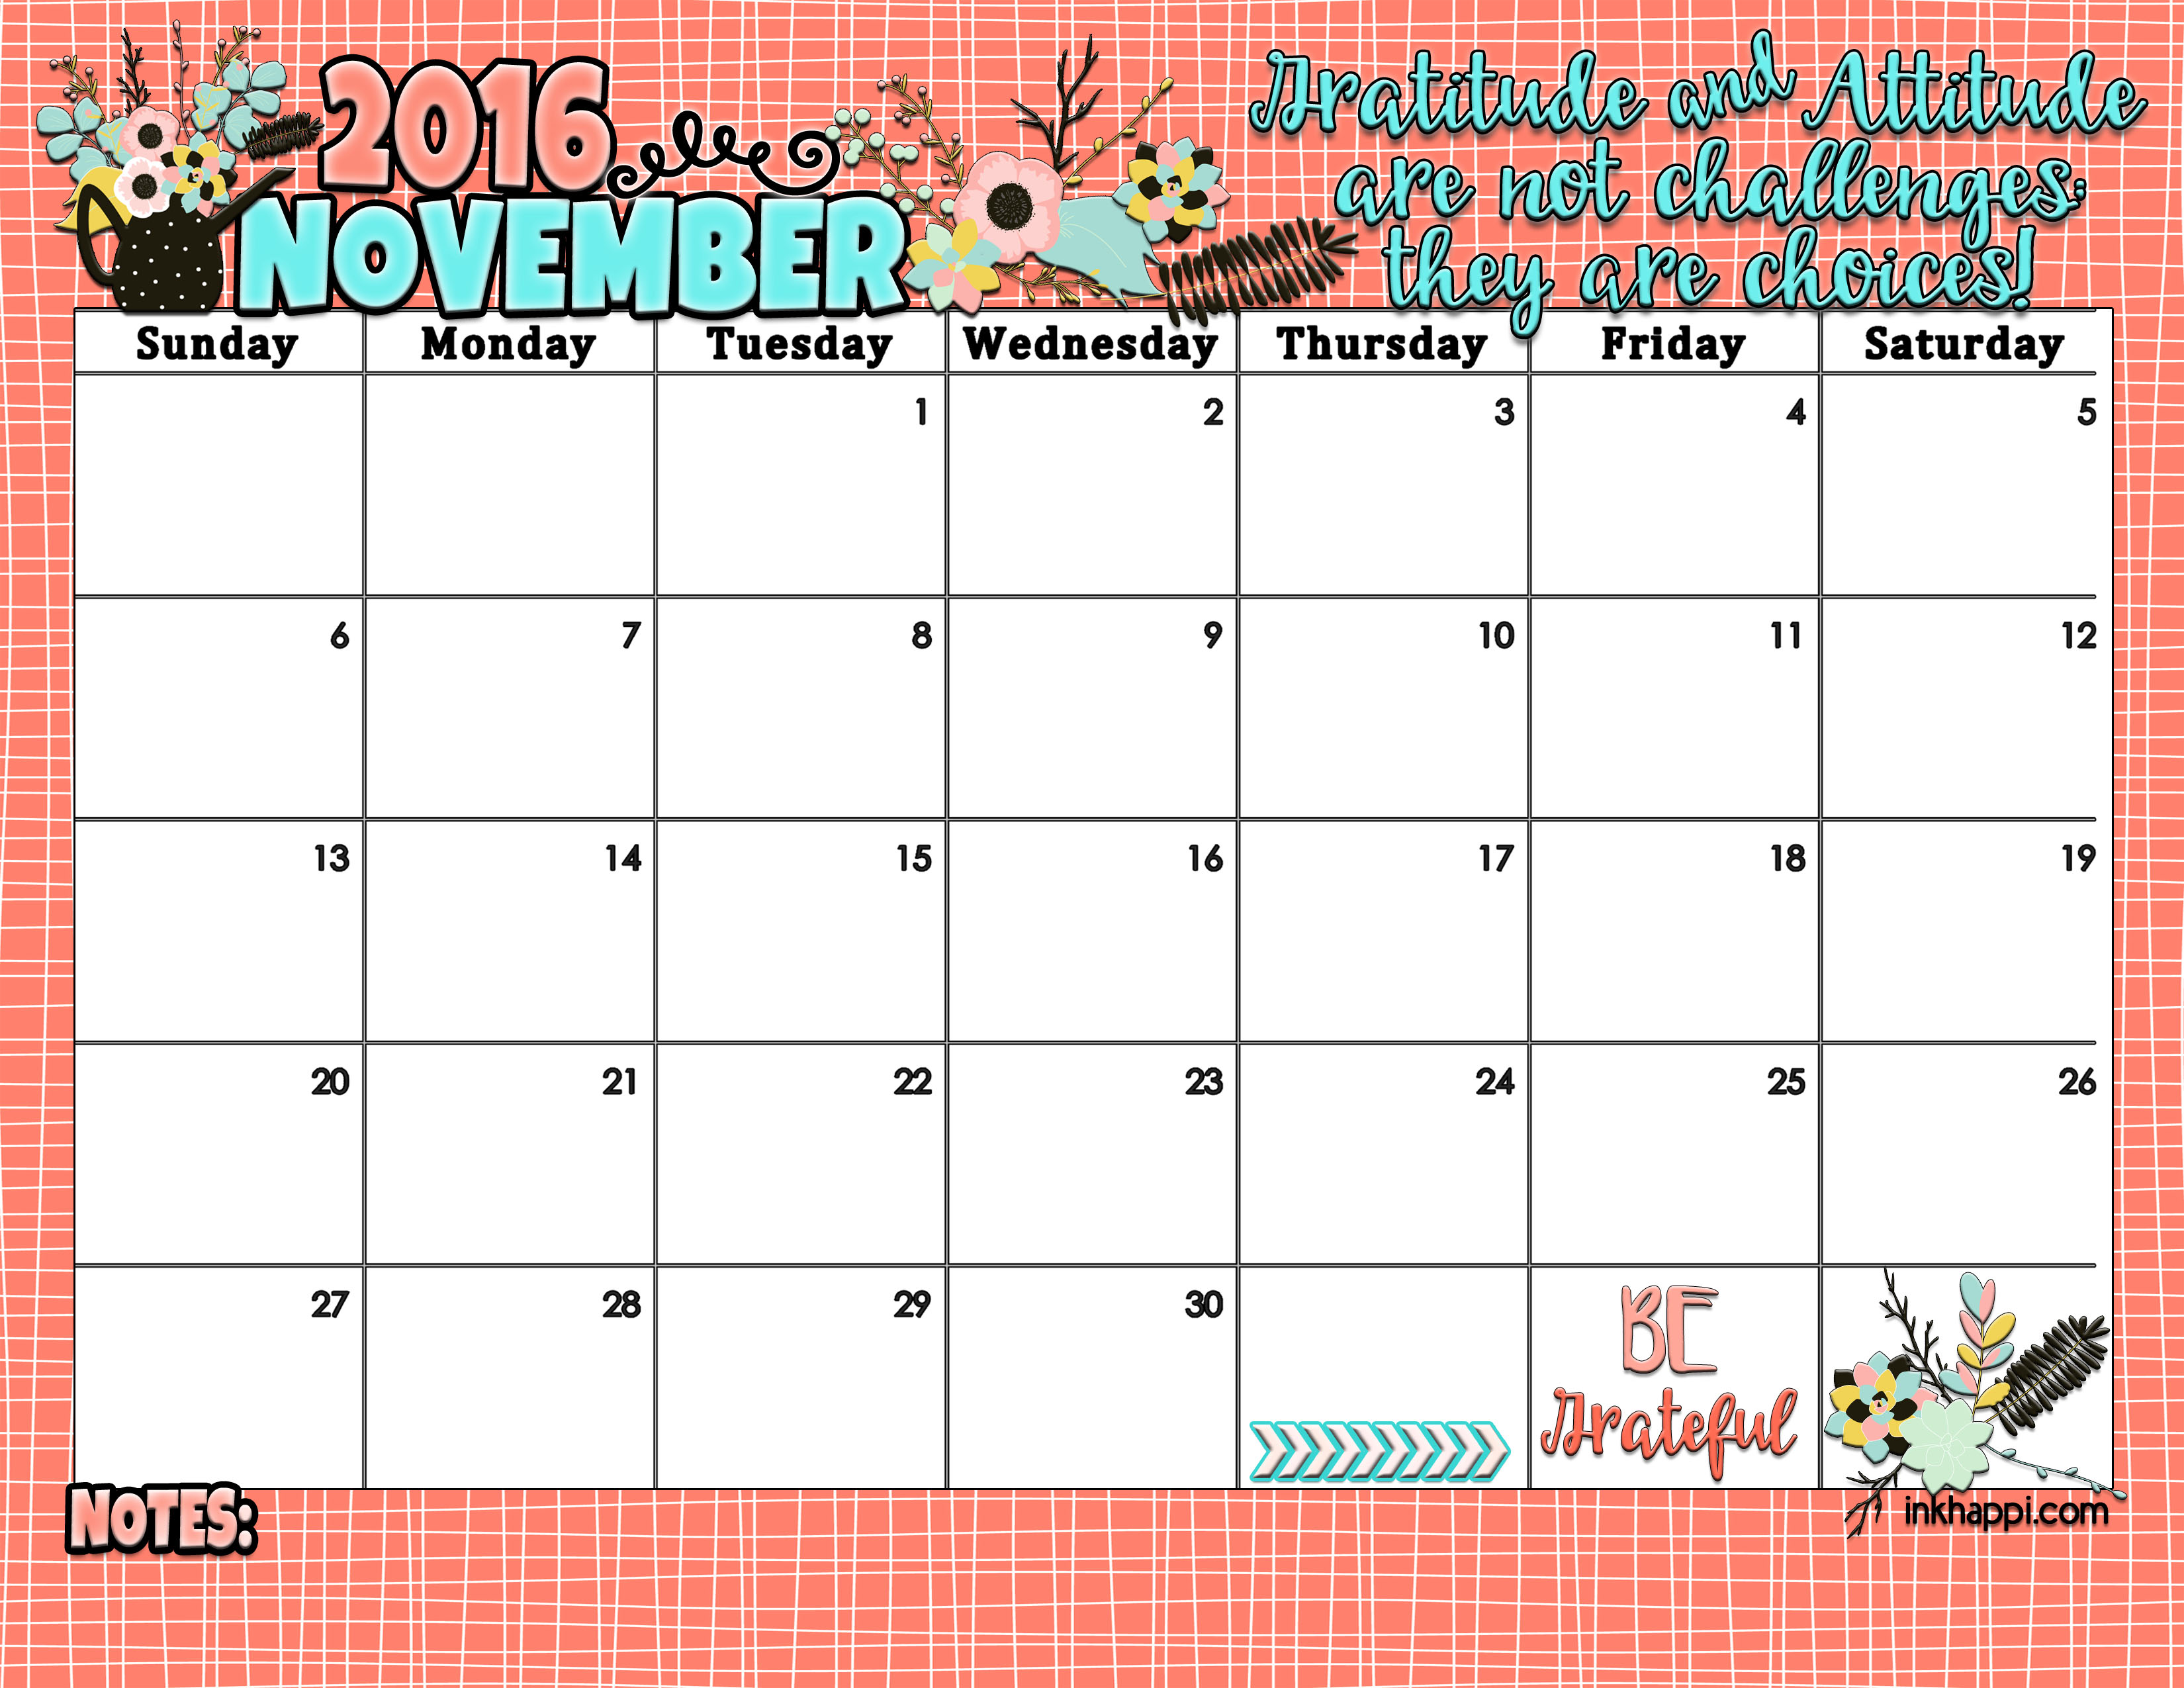 November 2016 calendar